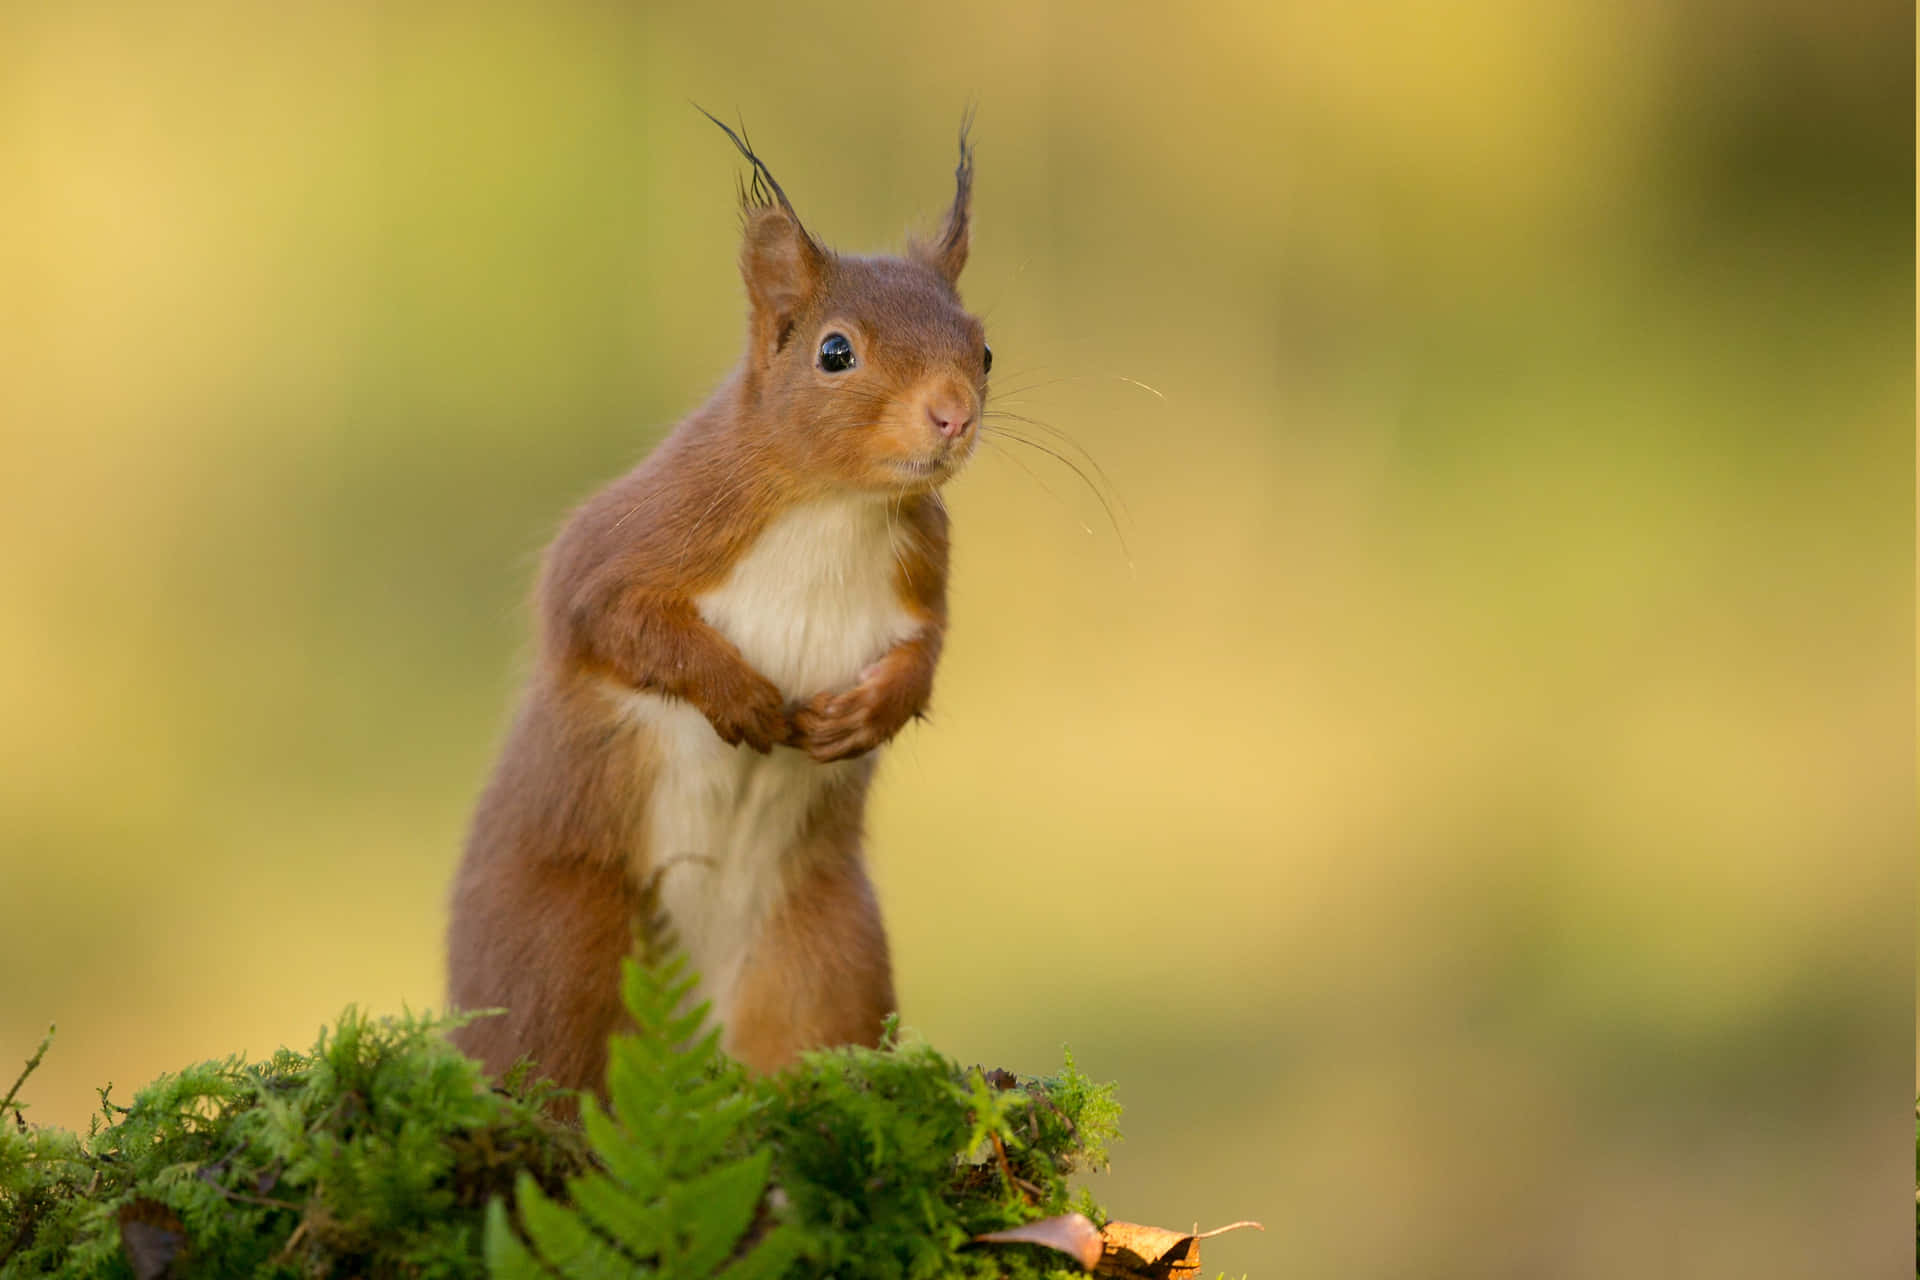 A playful squirrel perched atop a summer garden branch